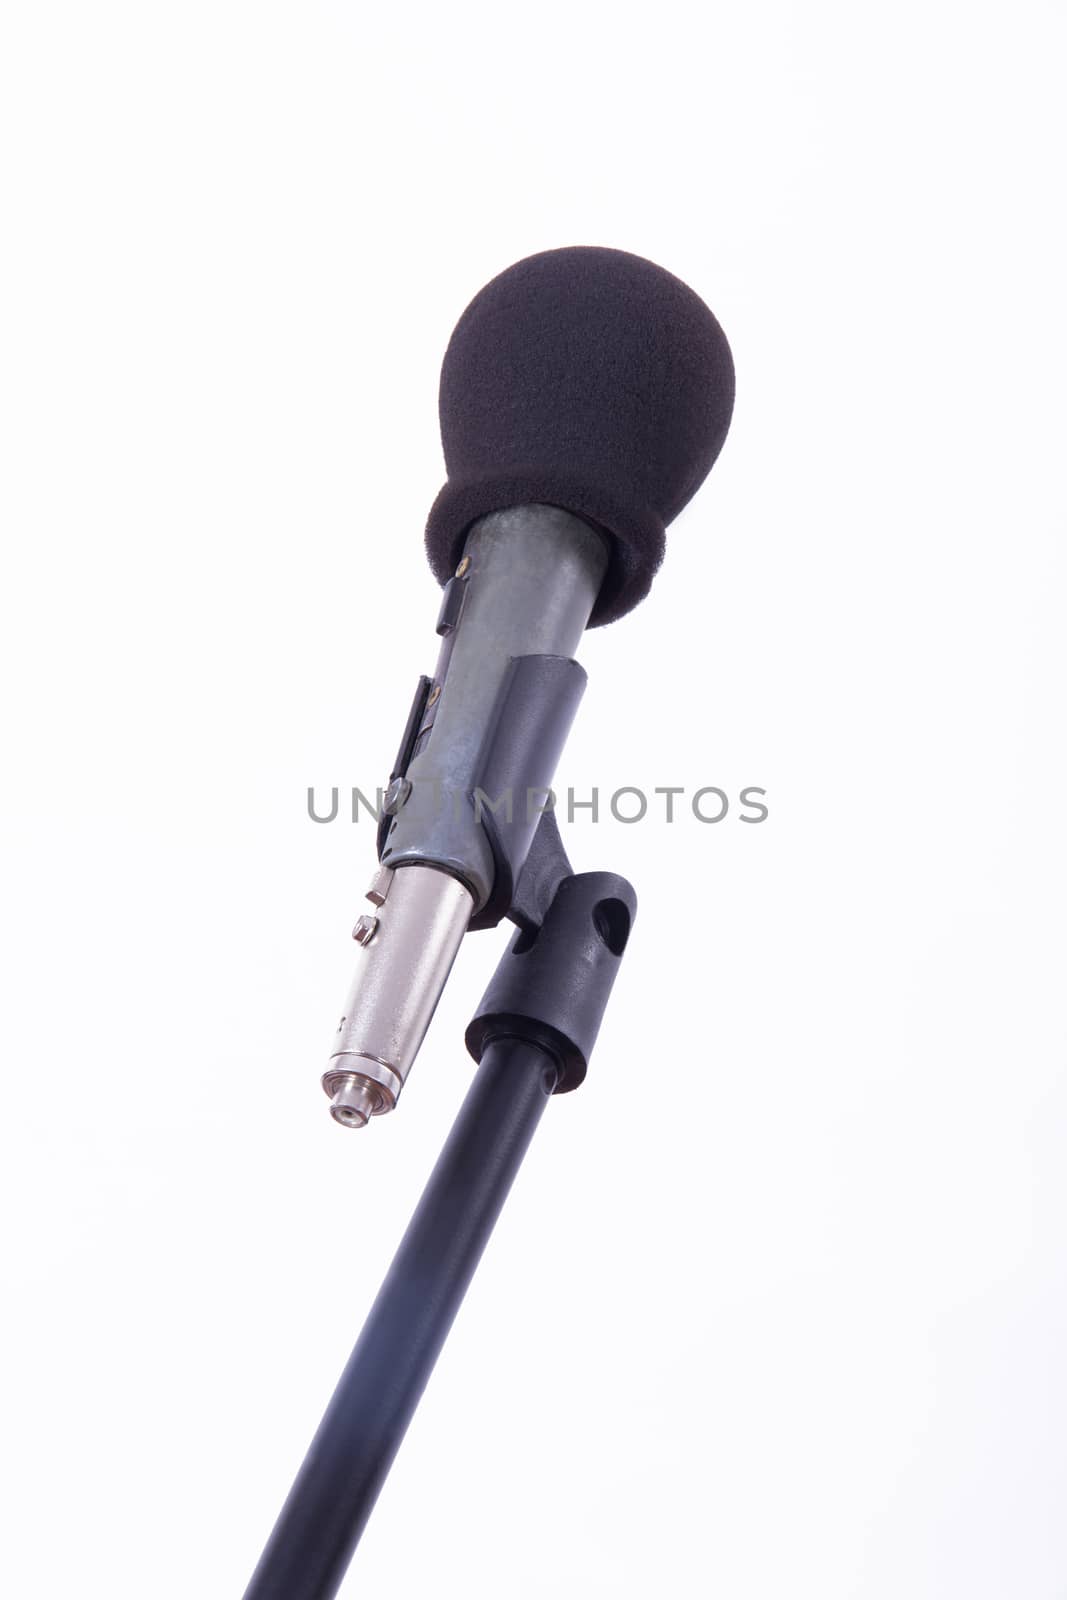 Black Microphone on Stand by niglaynike